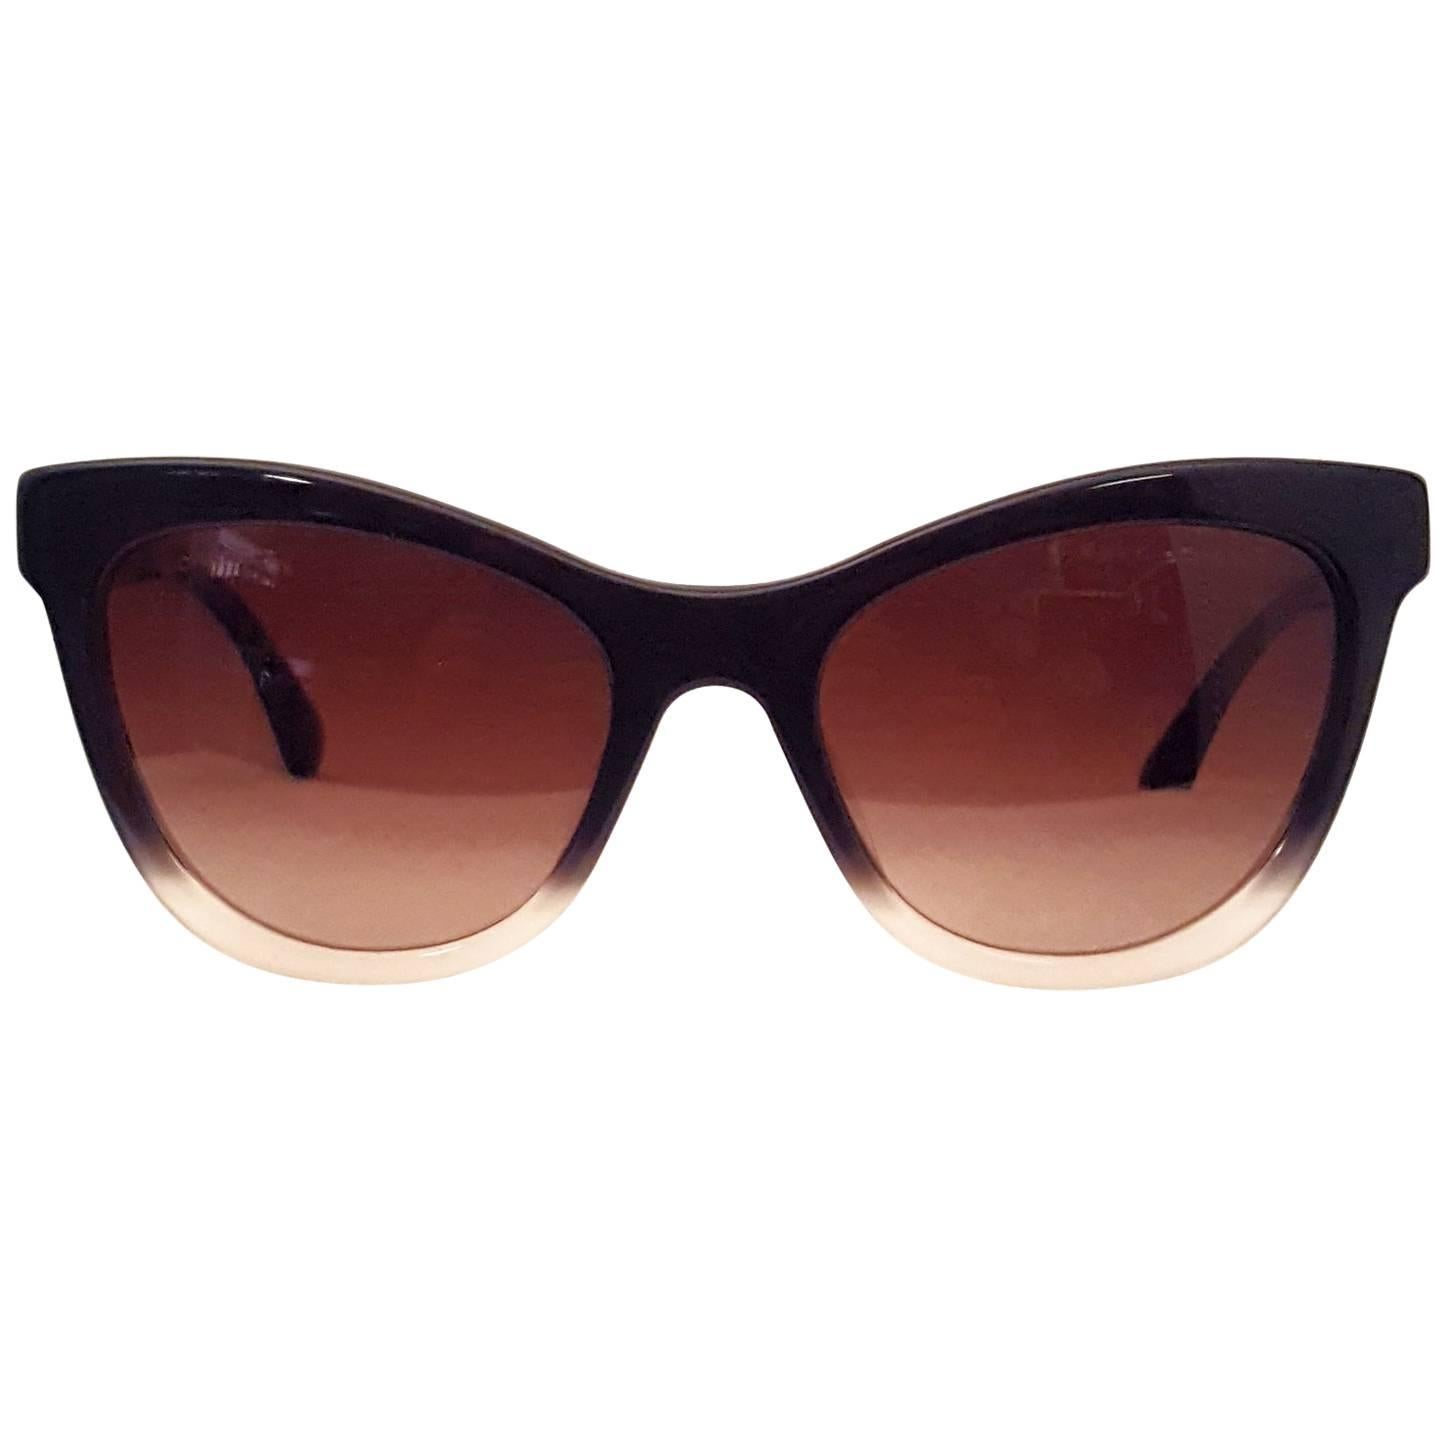 Chanel Black Ombre Polarized Cat Eye Style Sunglasses